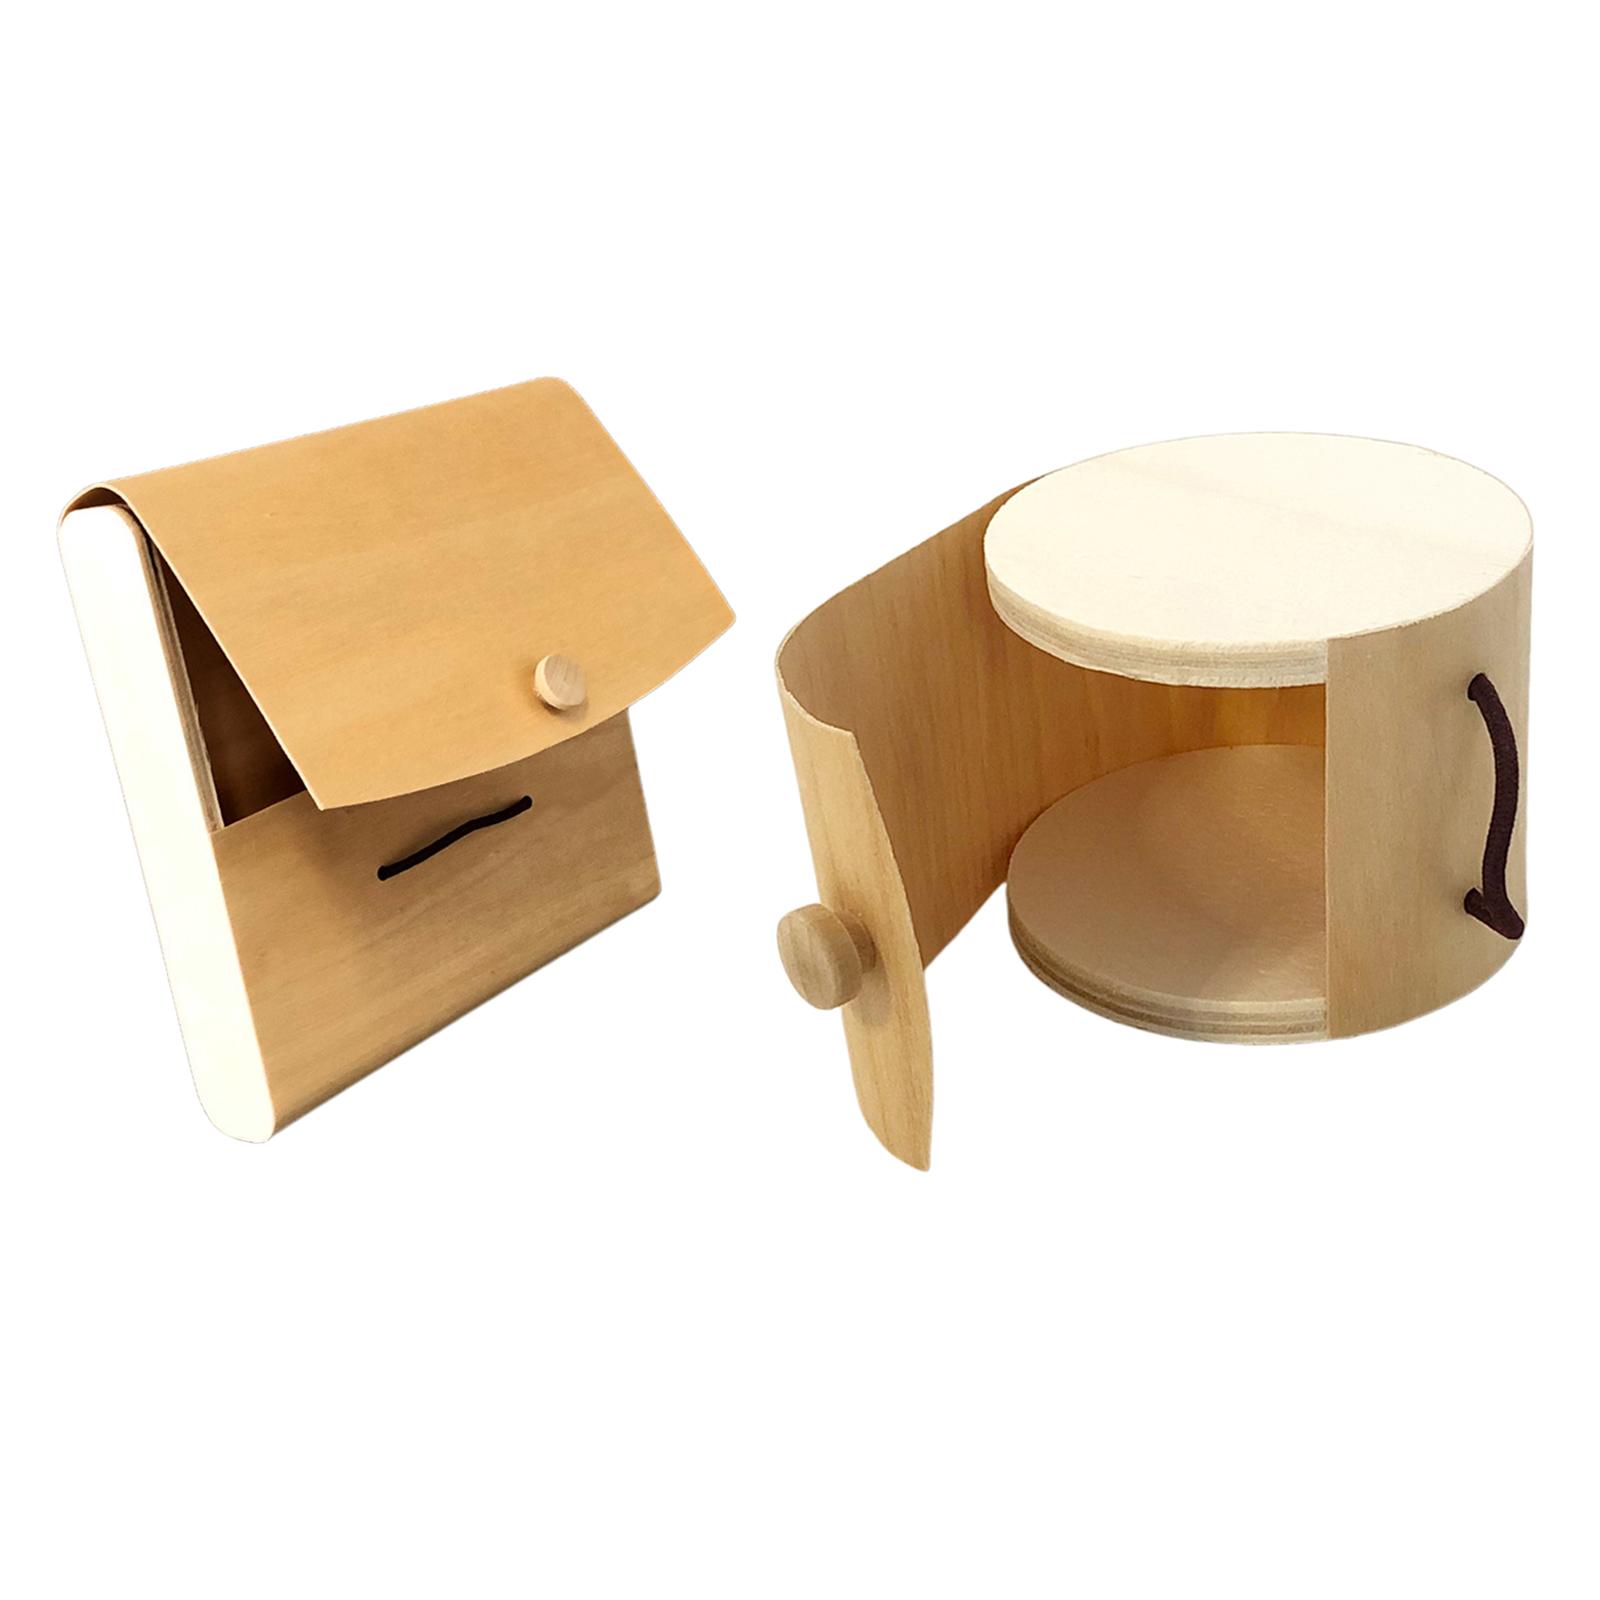 Wooden Storage Box Soft Tree Bark Jewelry Tea Organizer for Home Decor Gift 11x7 cm